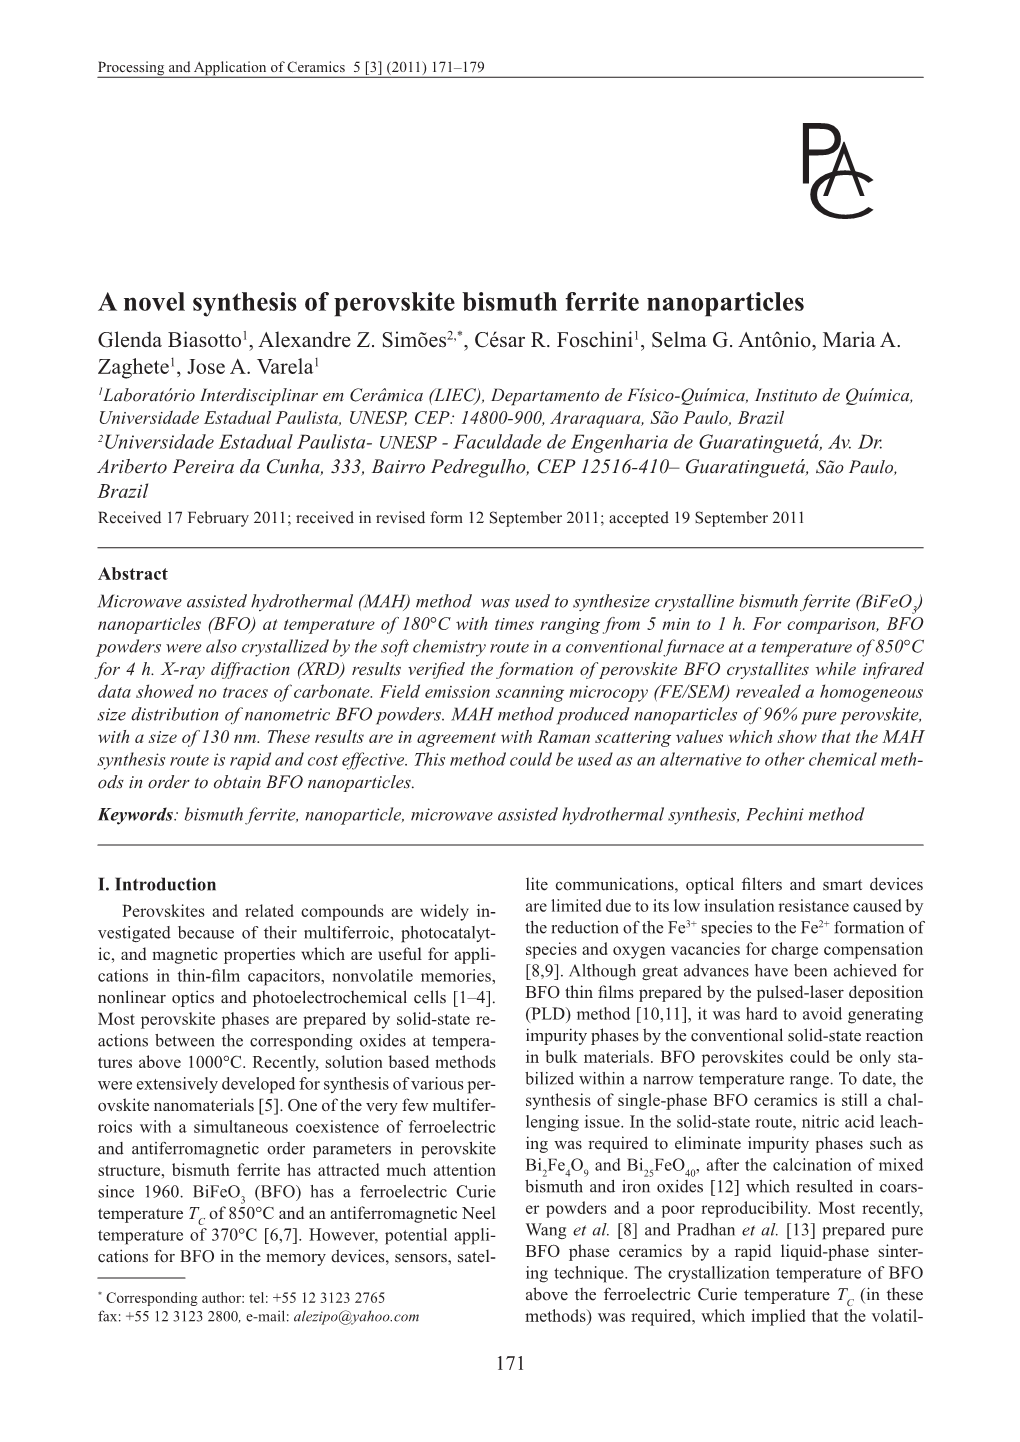 A Novel Synthesis of Perovskite Bismuth Ferrite Nanoparticles Glenda Biasotto1, Alexandre Z